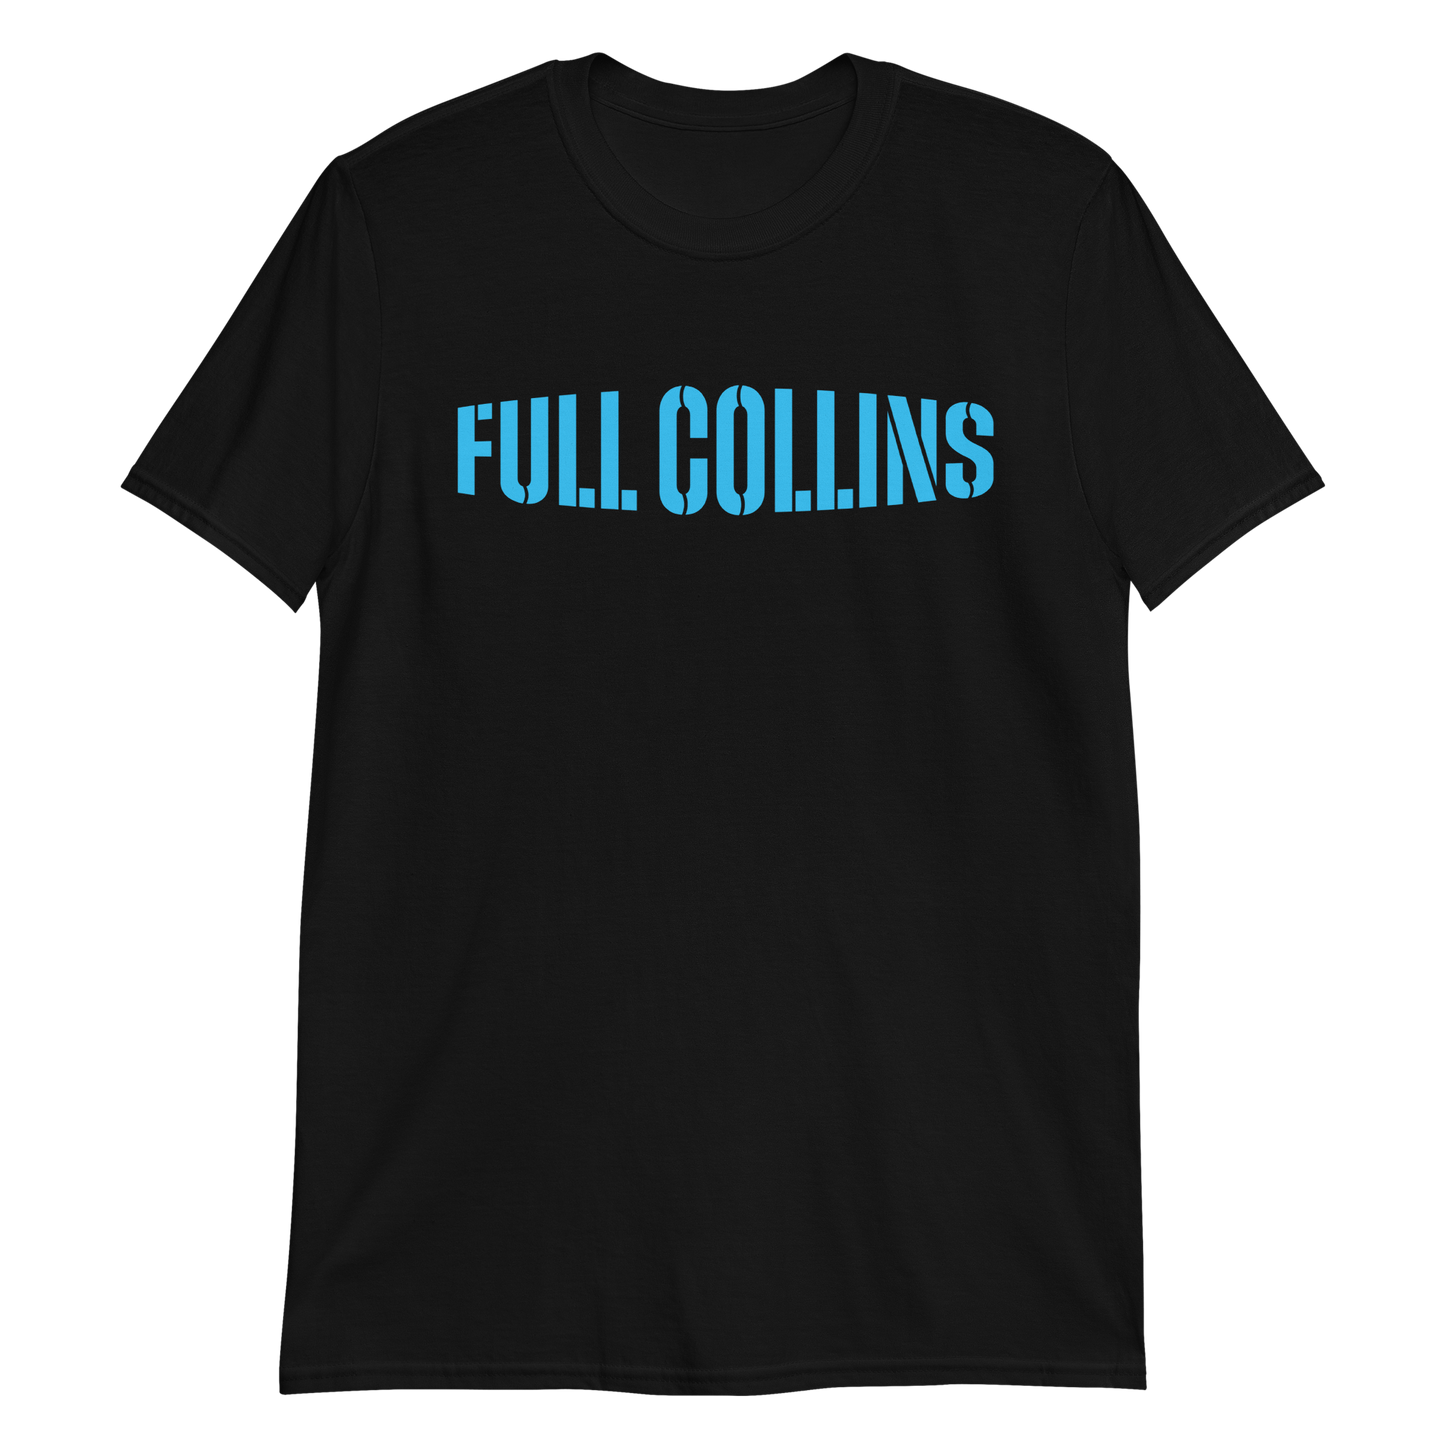 Full Collins T-Shirt